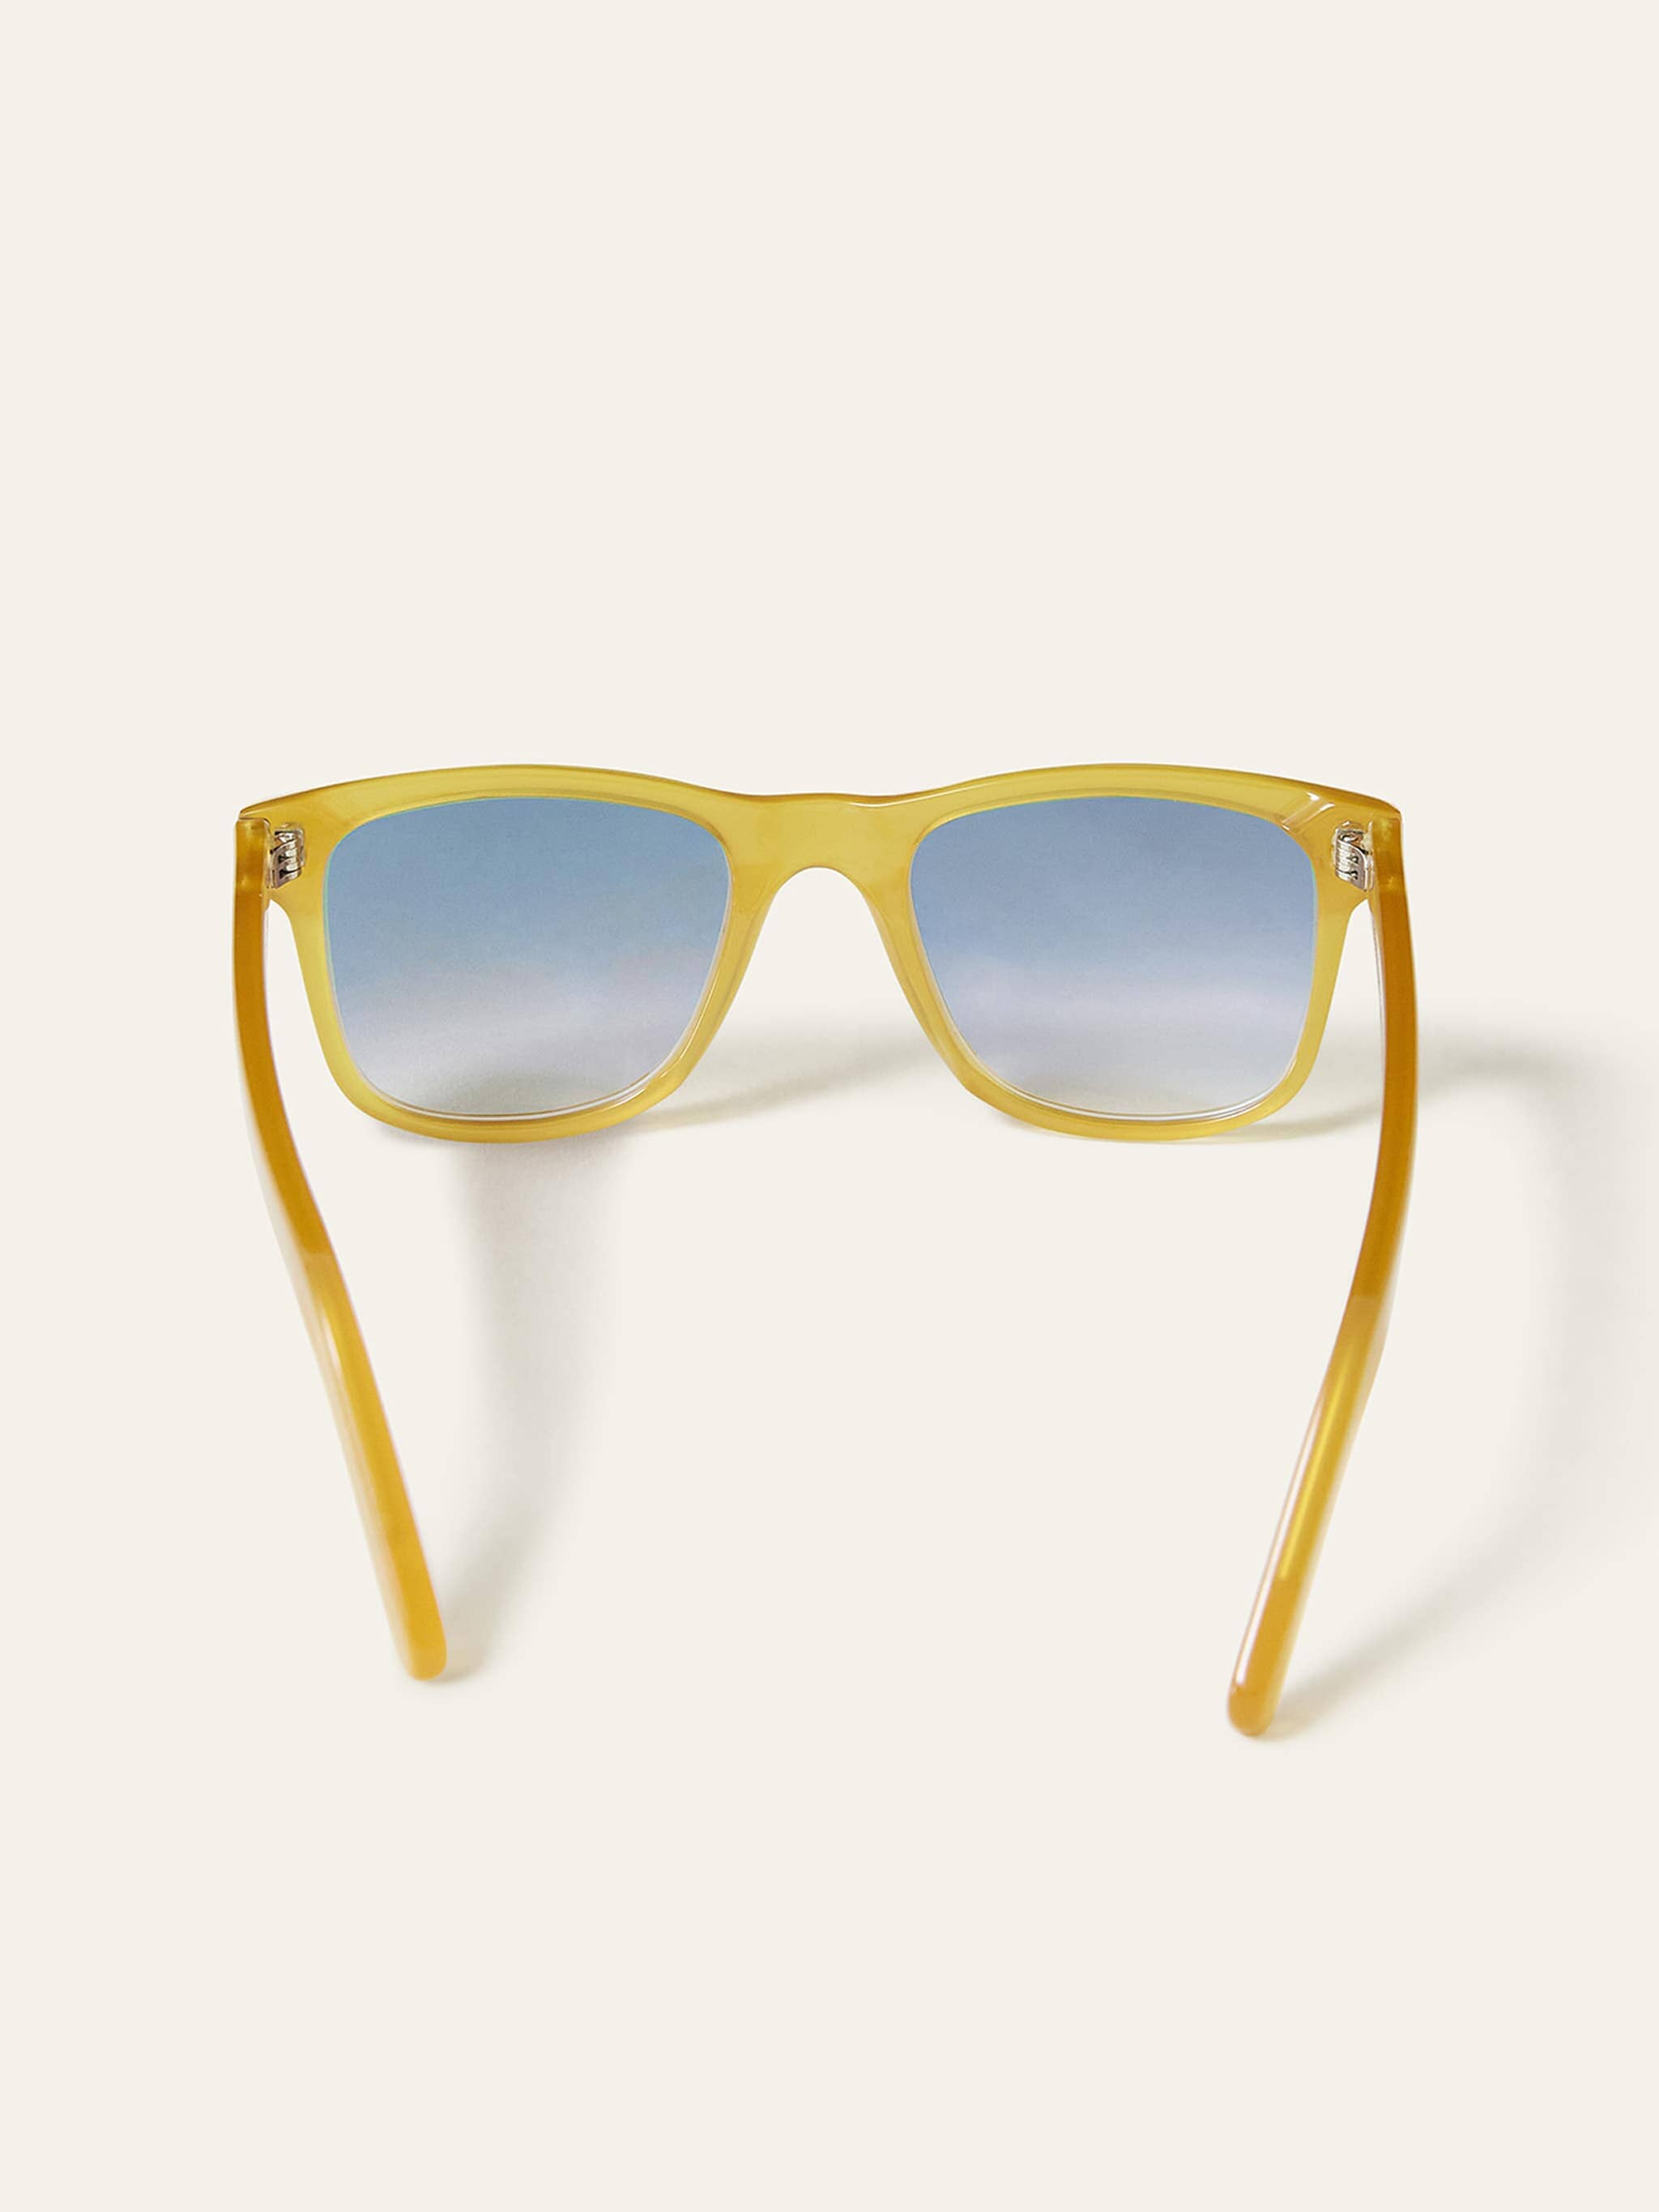 kingfisher-orange-sunglasses-934626.jpg